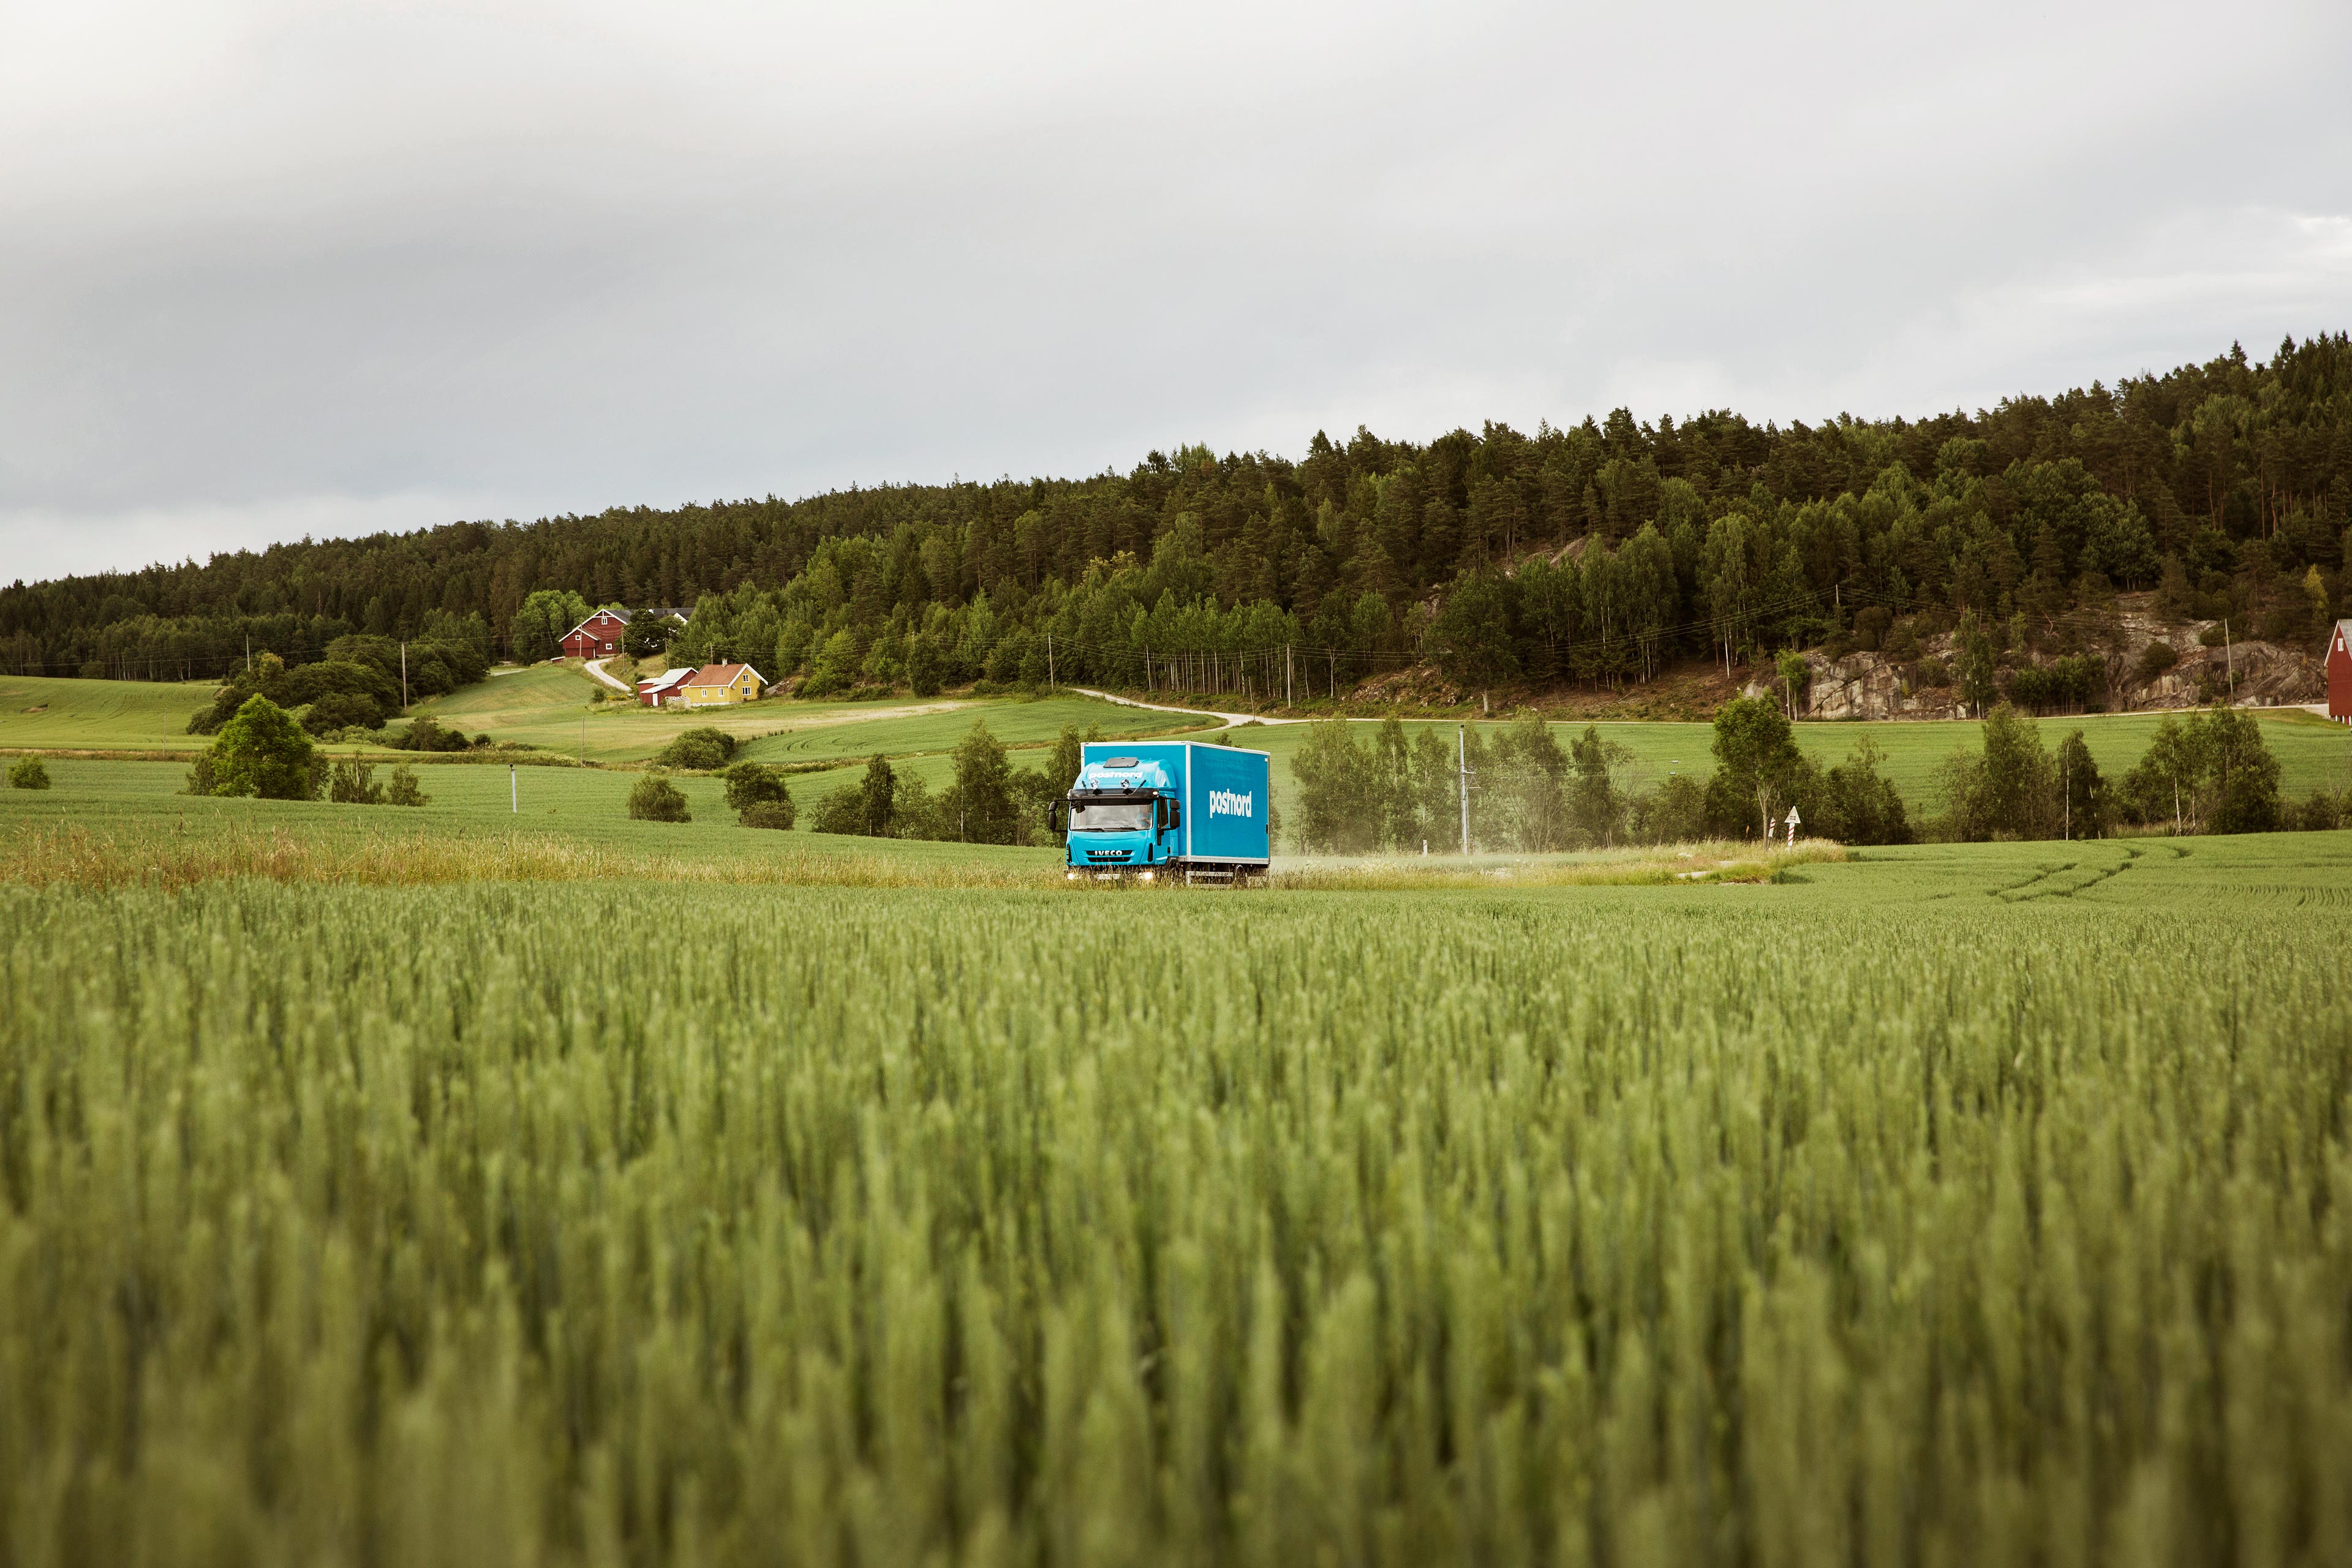 postnord-truck-driving-through-field-landscape.jpg